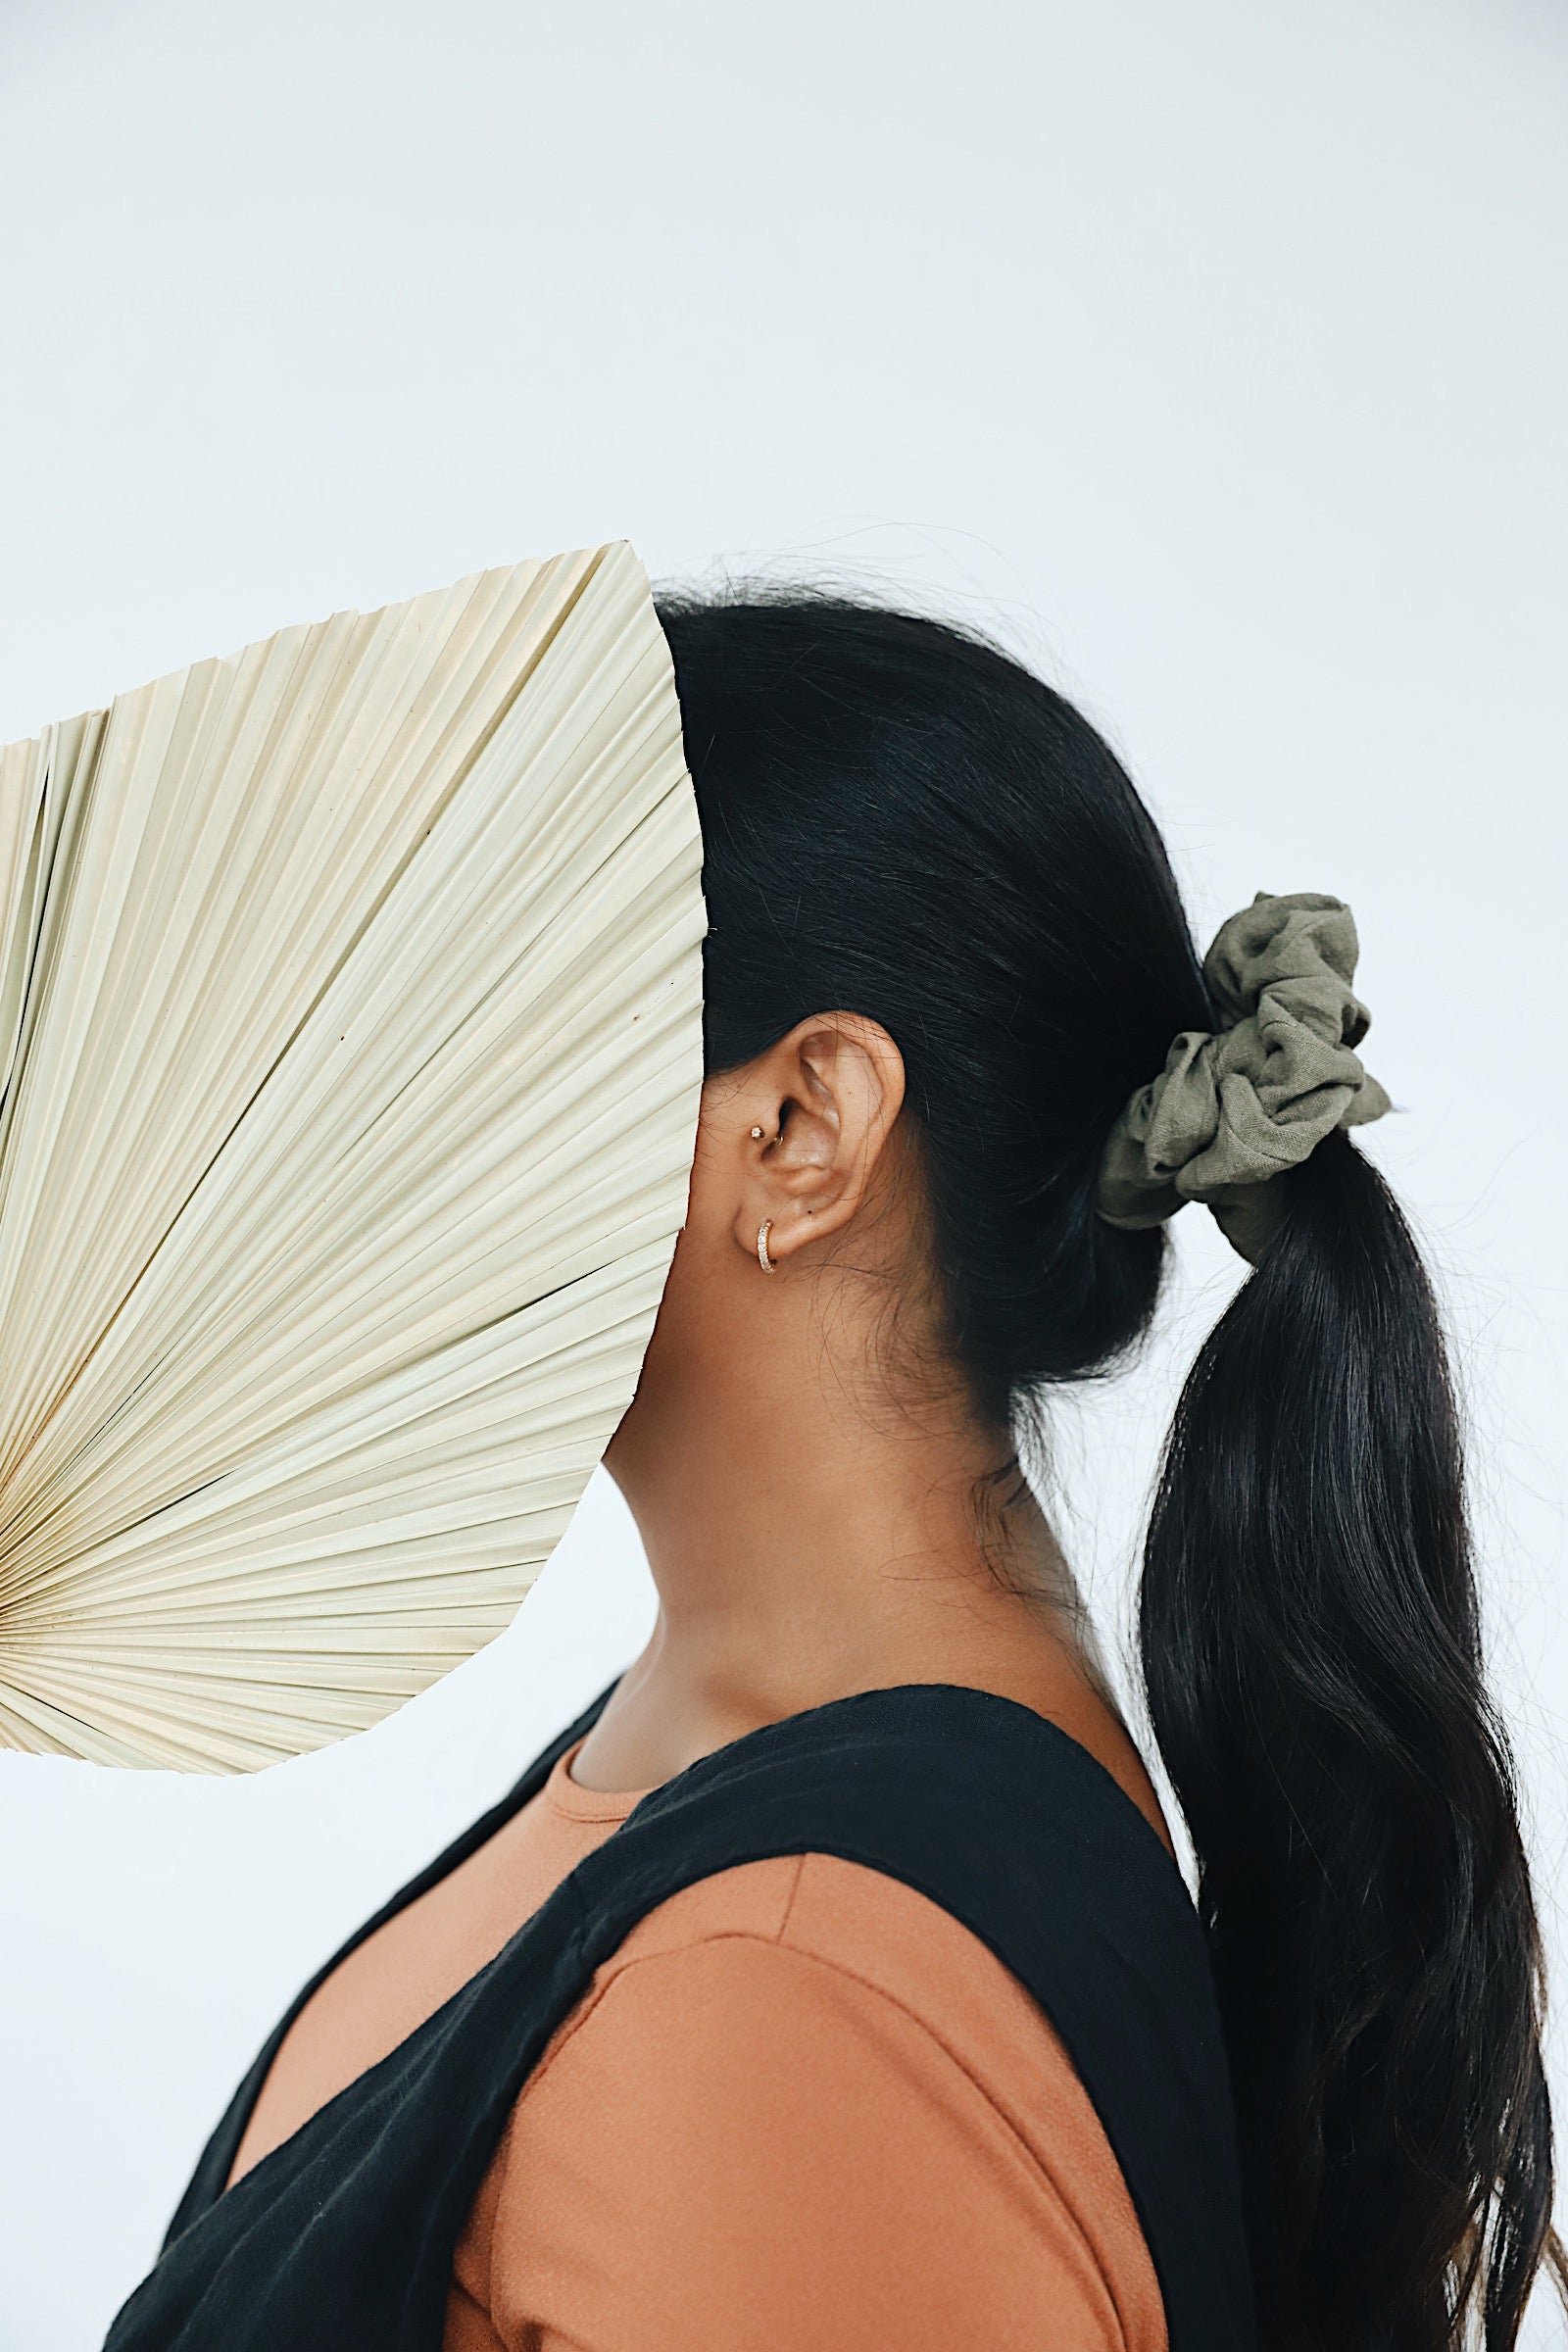 Dark Olive Linen Scrunchie in model's ponytail